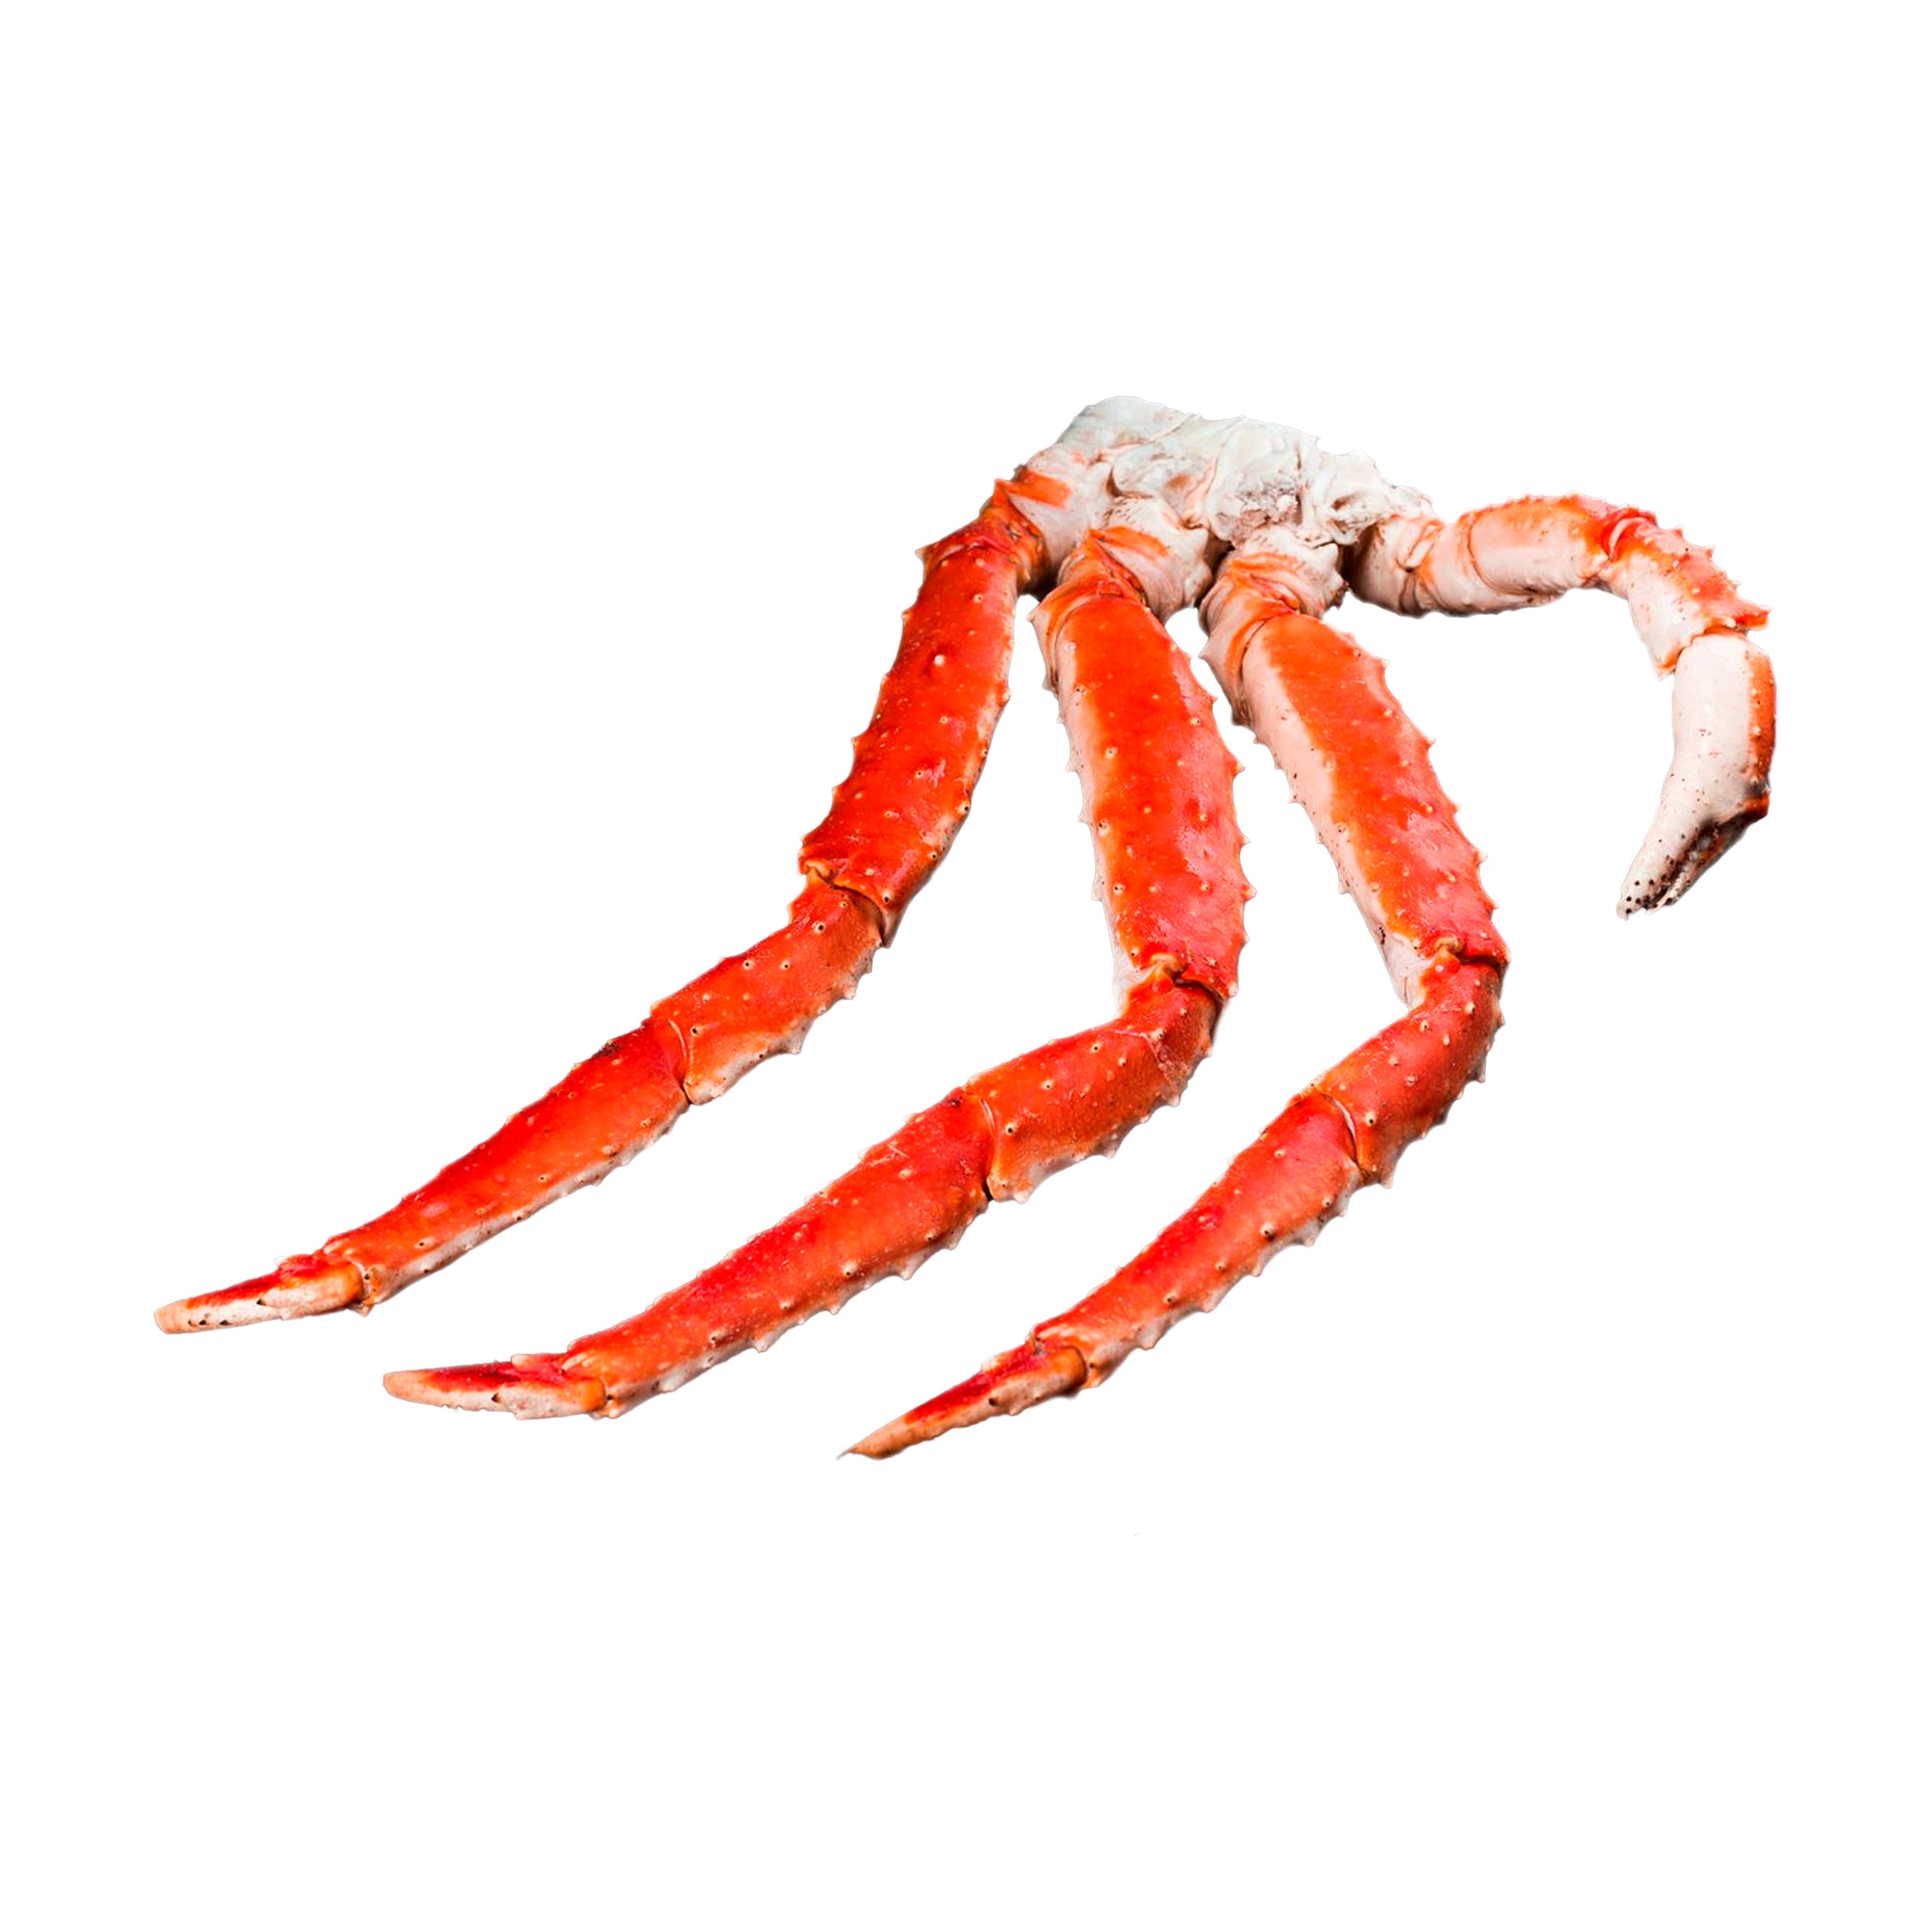 Red King Crab Legs "Frozen"